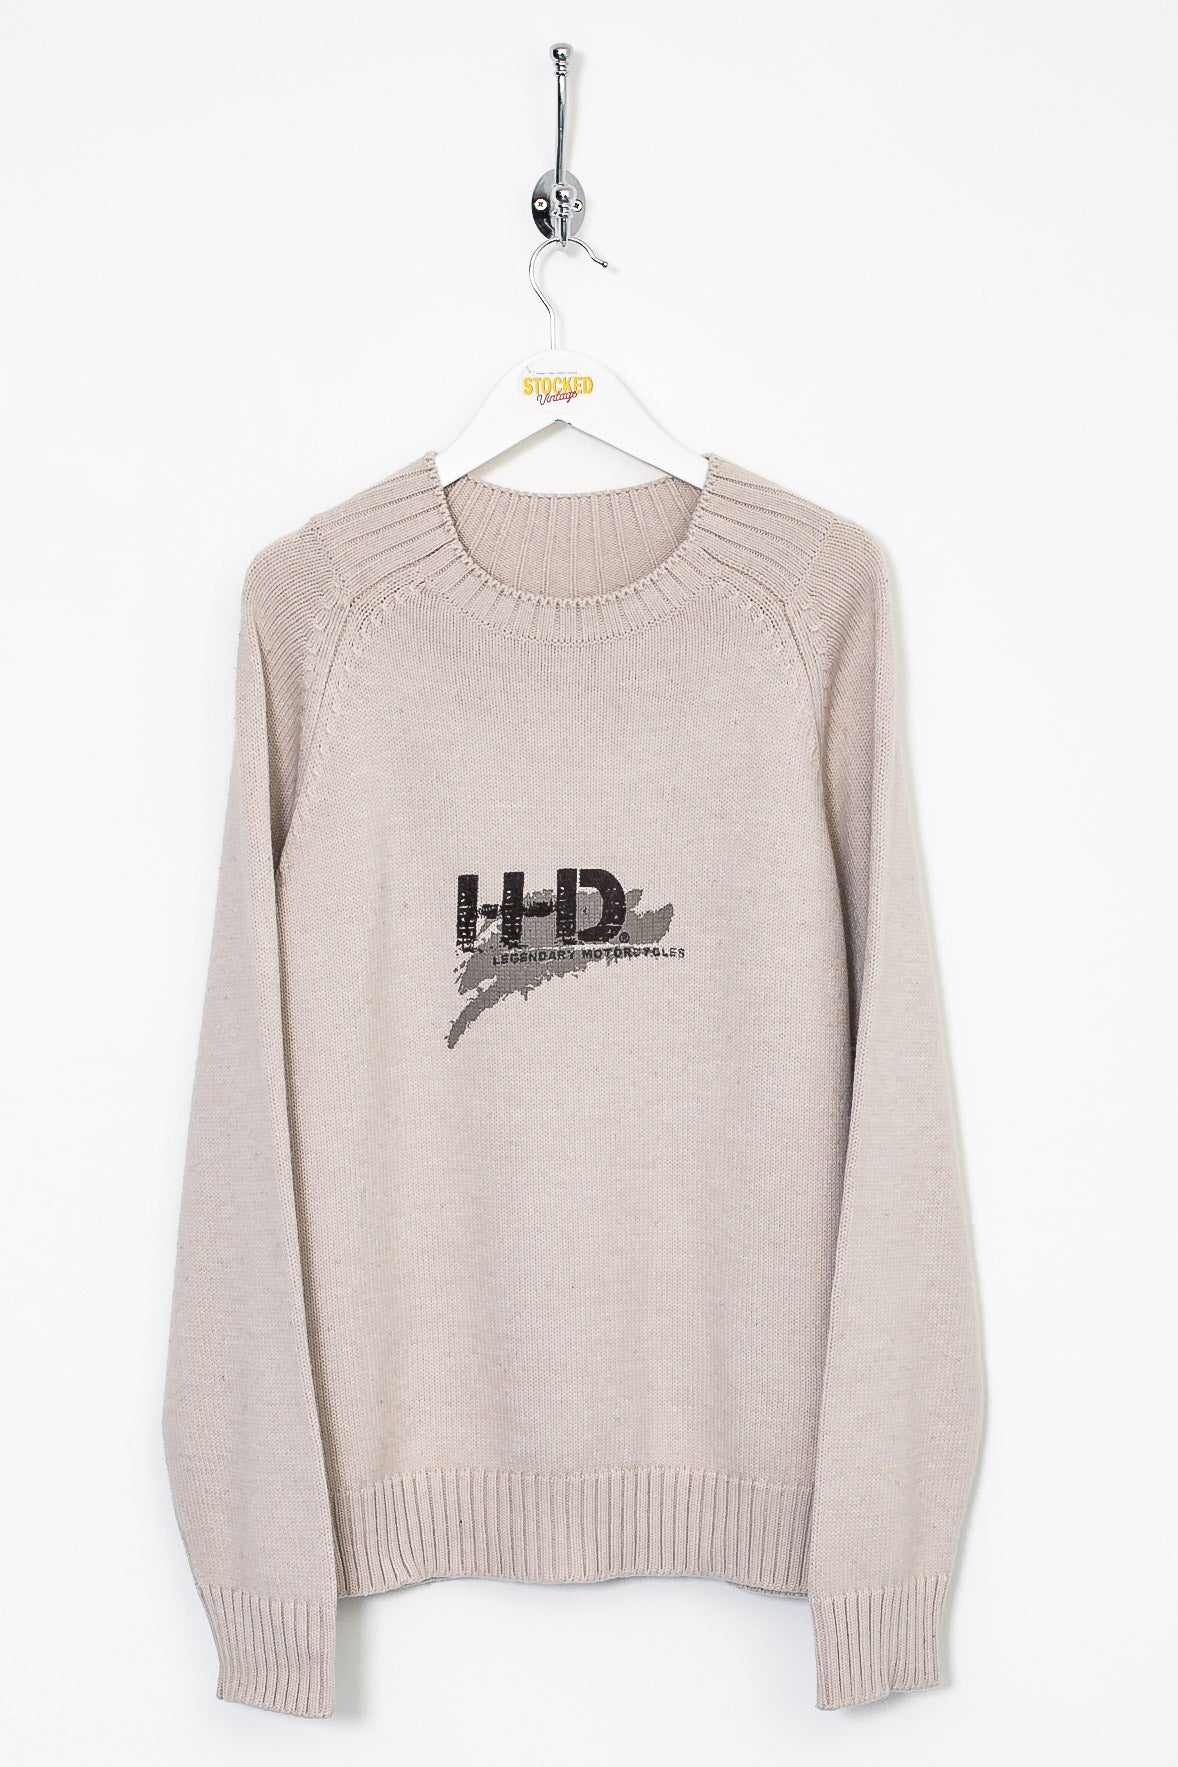 00s Harley Davidson Knit Sweatshirt (S)